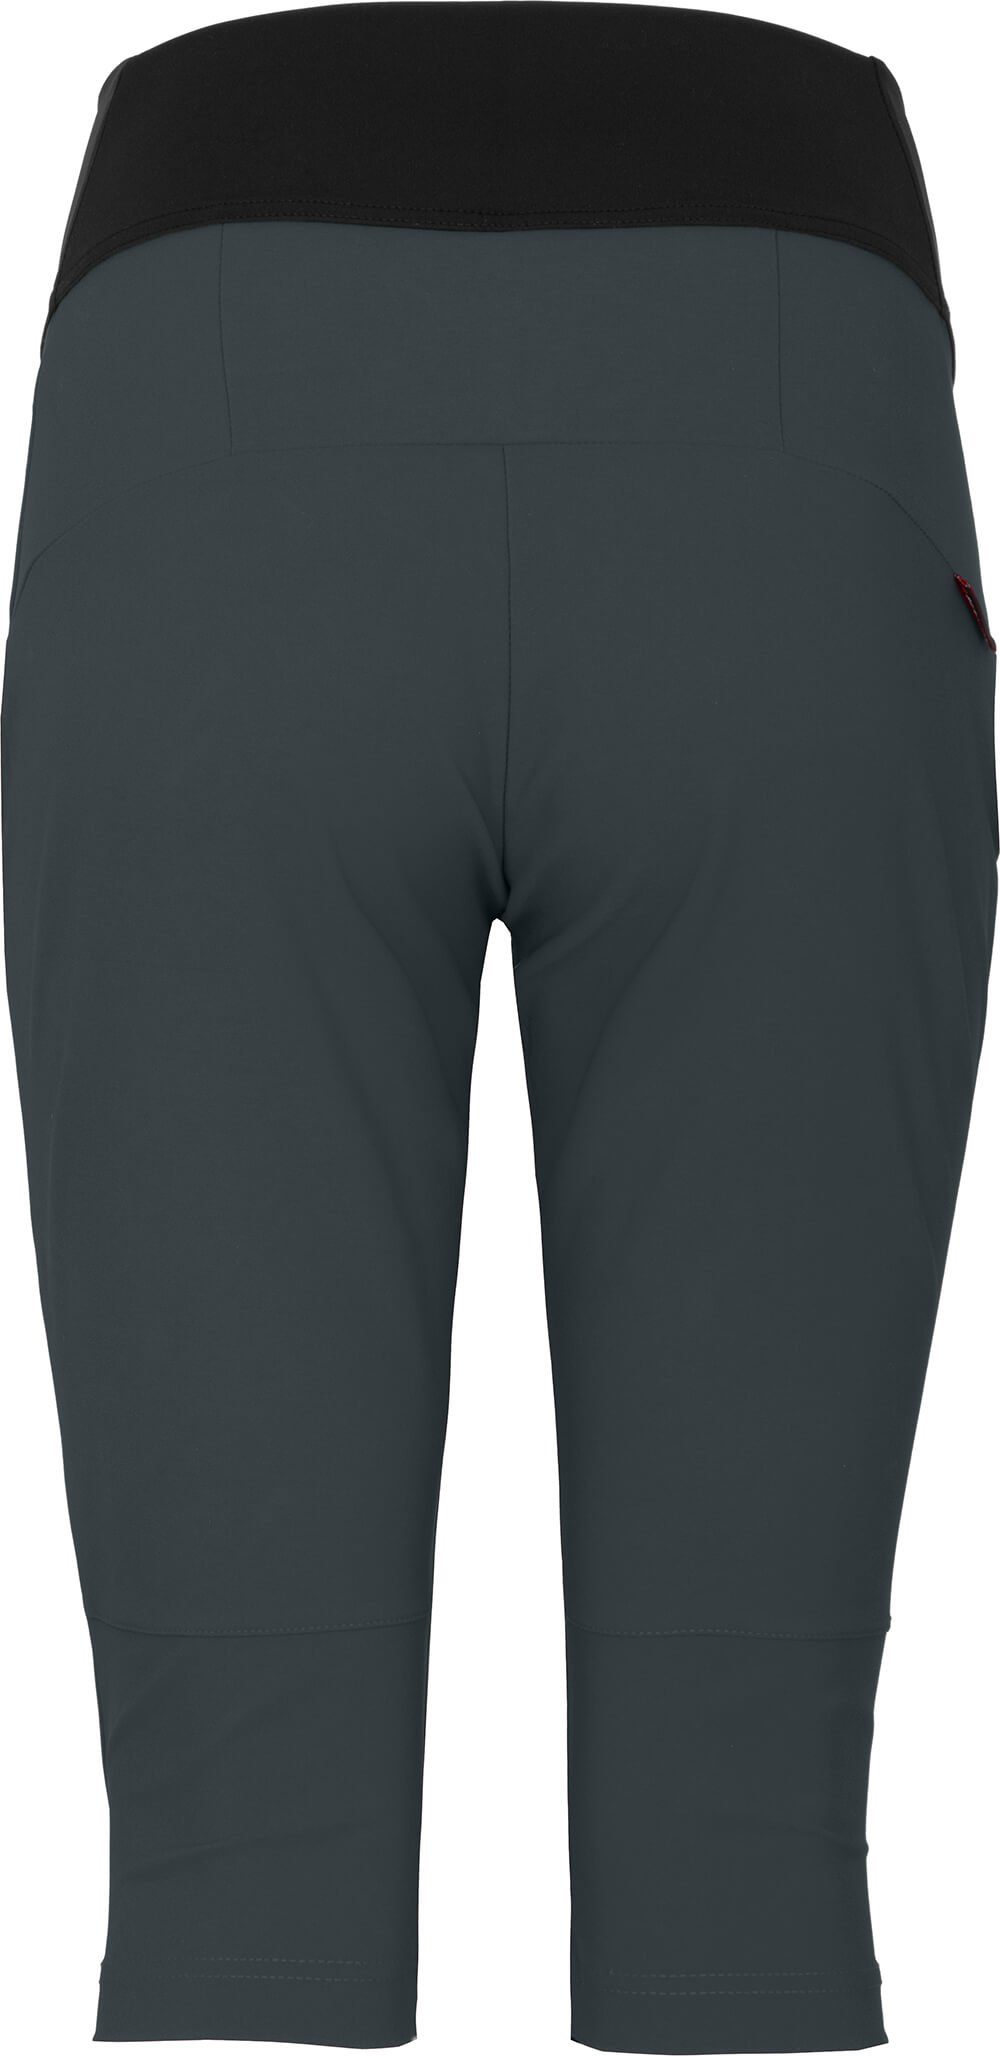 Leggings, Outdoor Normalgrößen, Bergson Damen TIKEN Outdoorhose 3/4 elastisch, Capri dunkel grau schnelltrocknend, (tight)